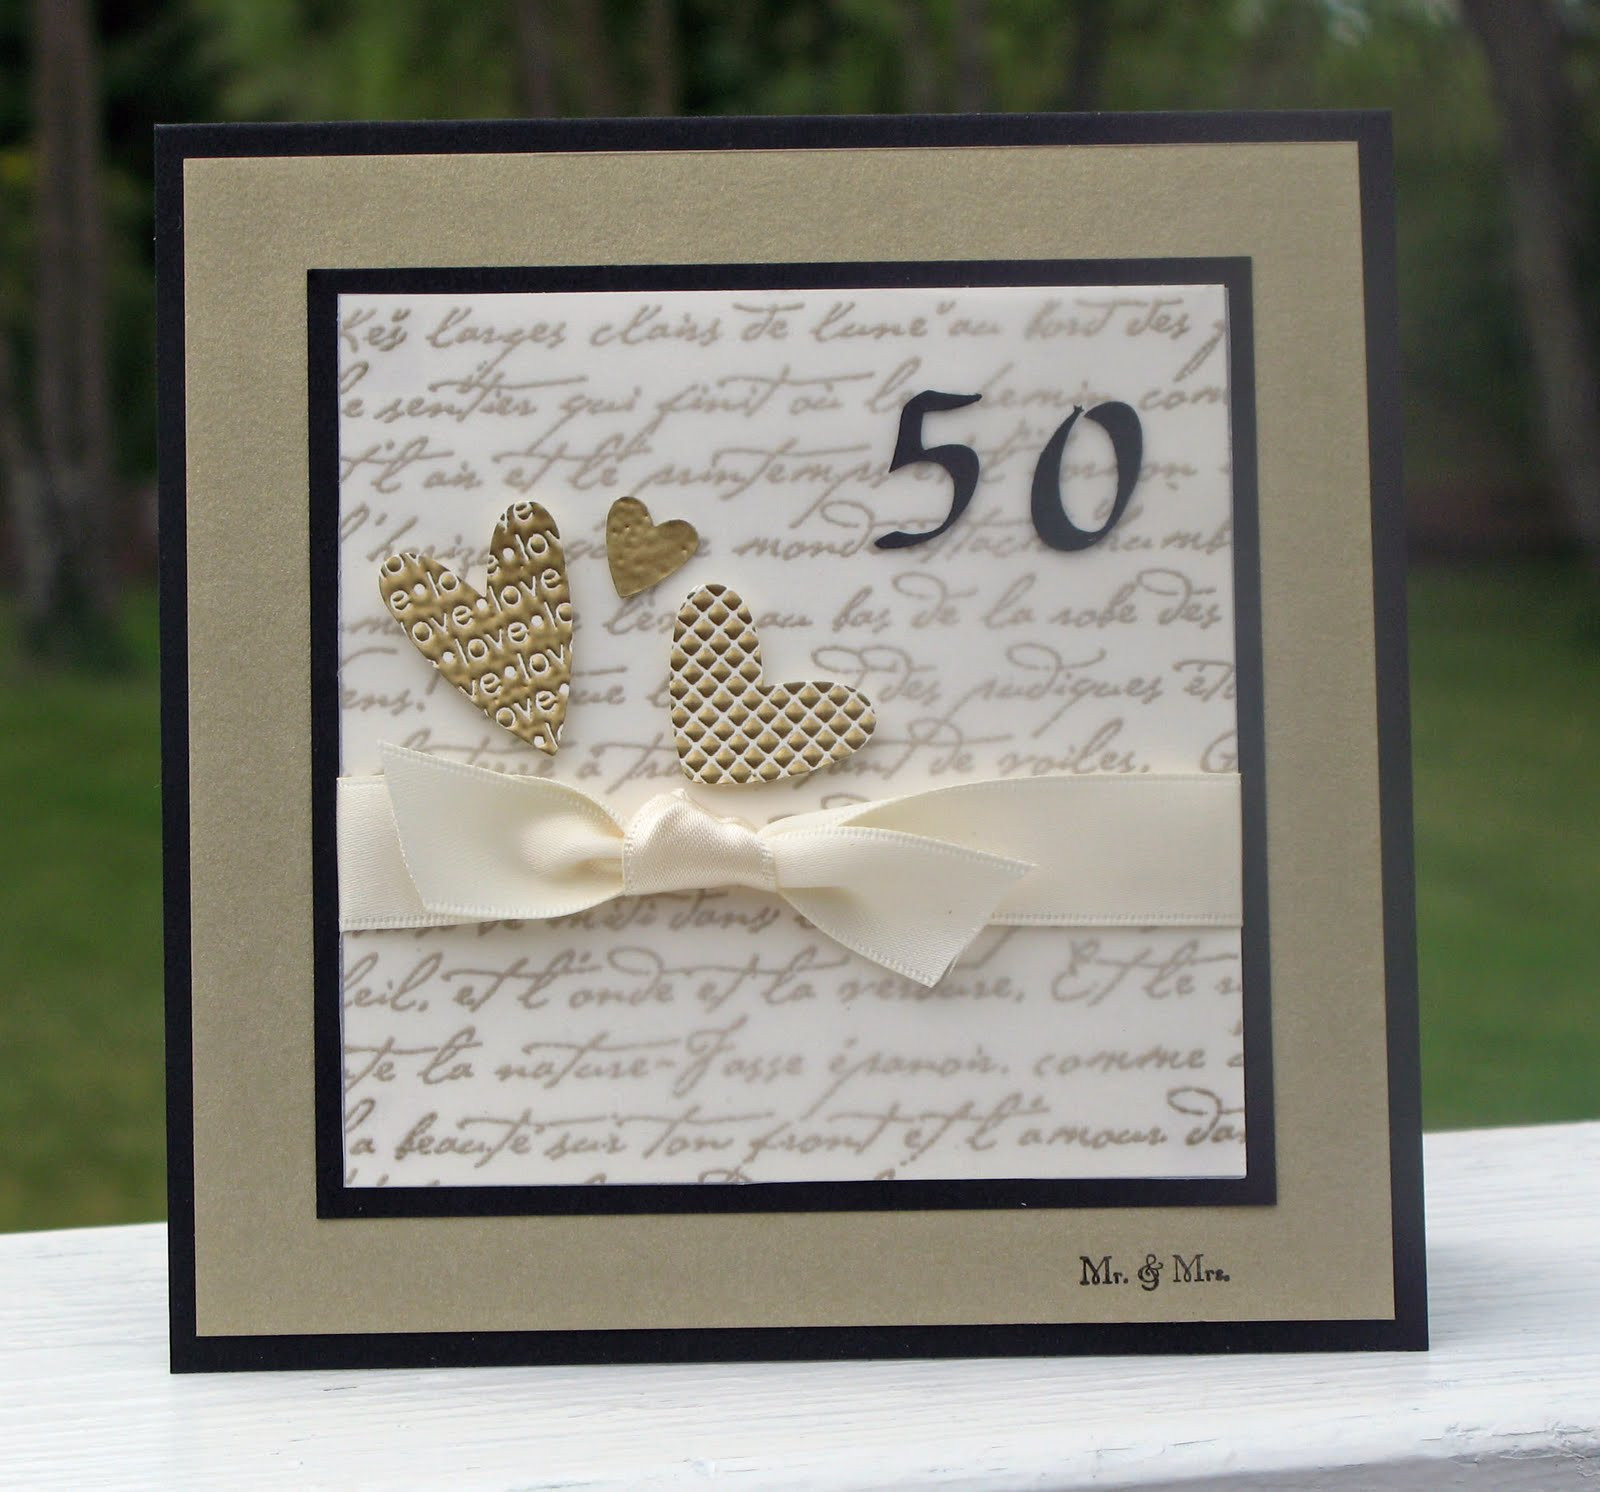 Gift Ideas For 50th Wedding Anniversary
 50th Wedding Anniversary ideas on Pinterest